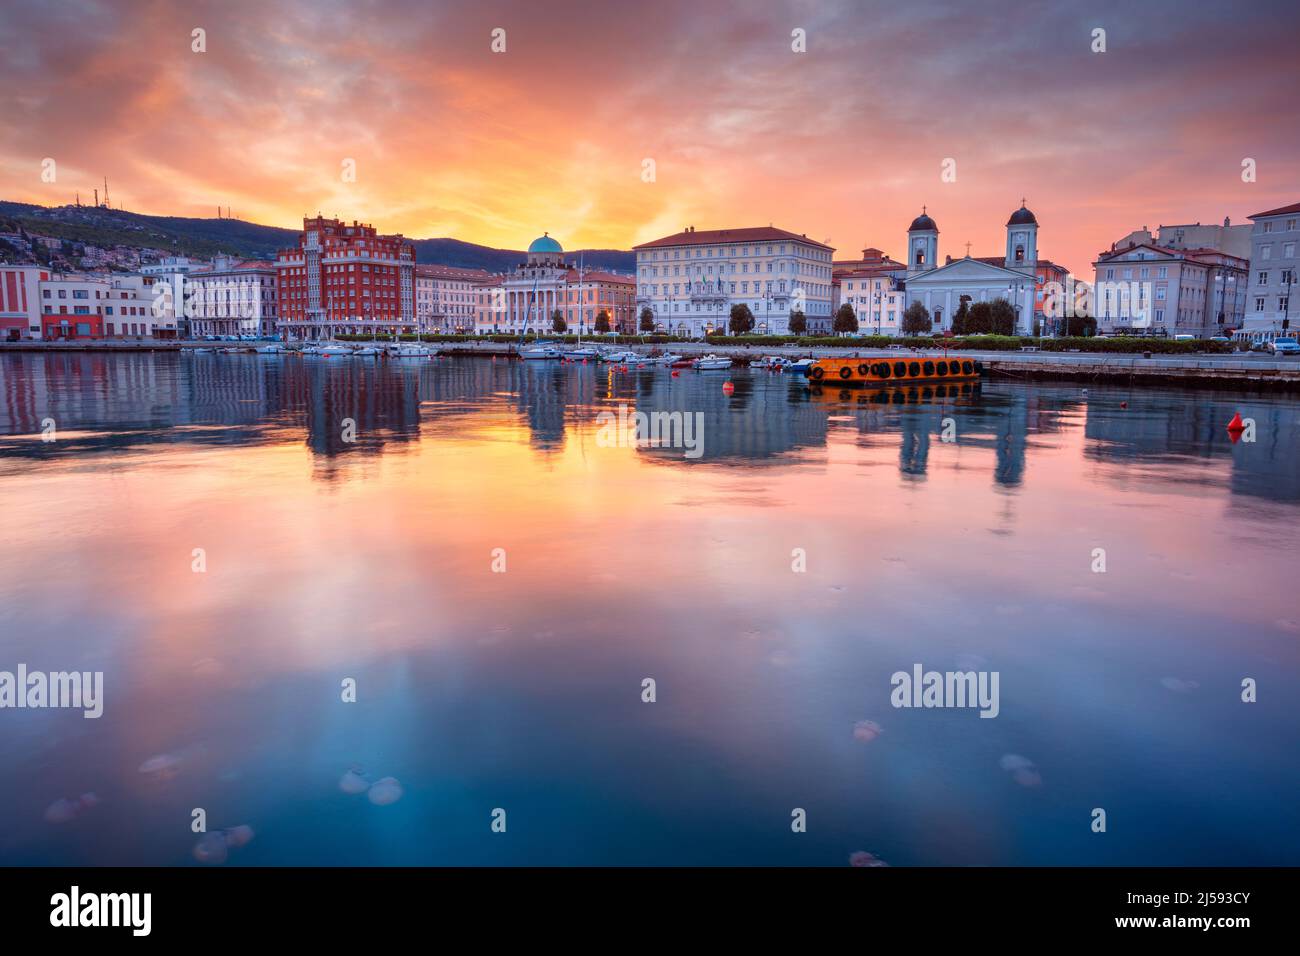 Trieste, Italia. Imagen del paisaje urbano del centro de Trieste, Italia, al amanecer dramático. Foto de stock